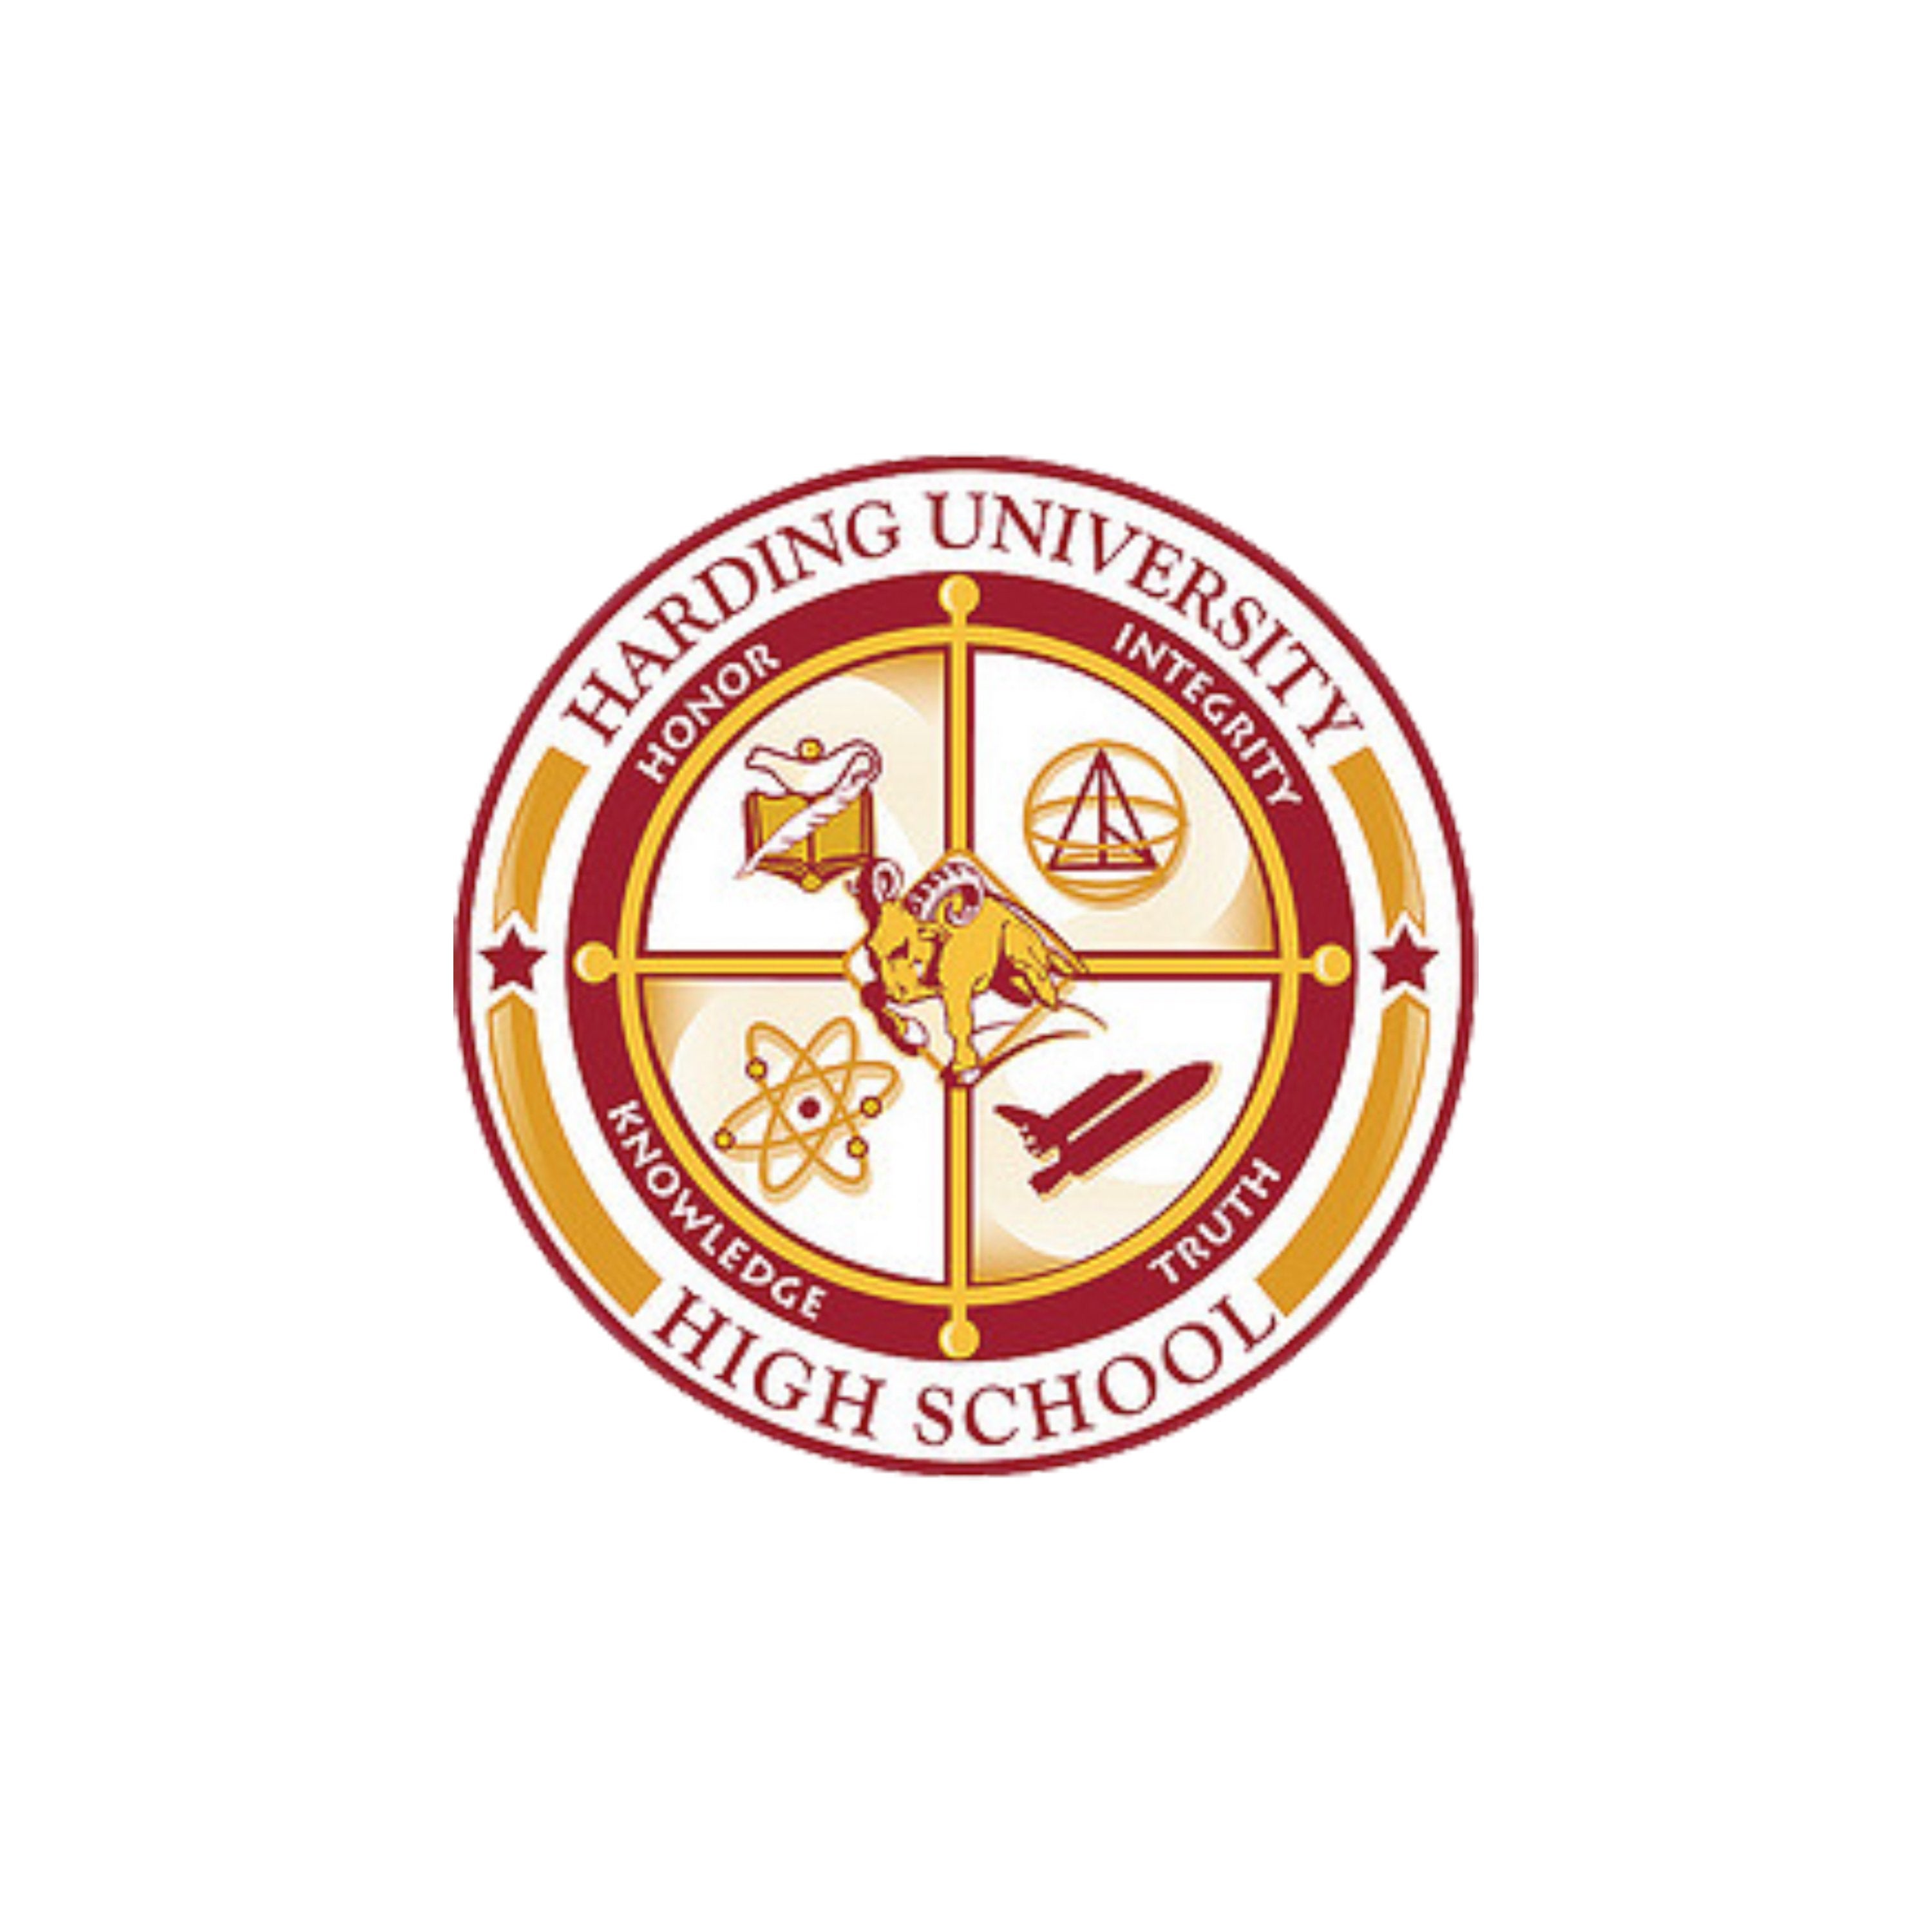 Harding University High School Southern Recognition, Inc. Graduate